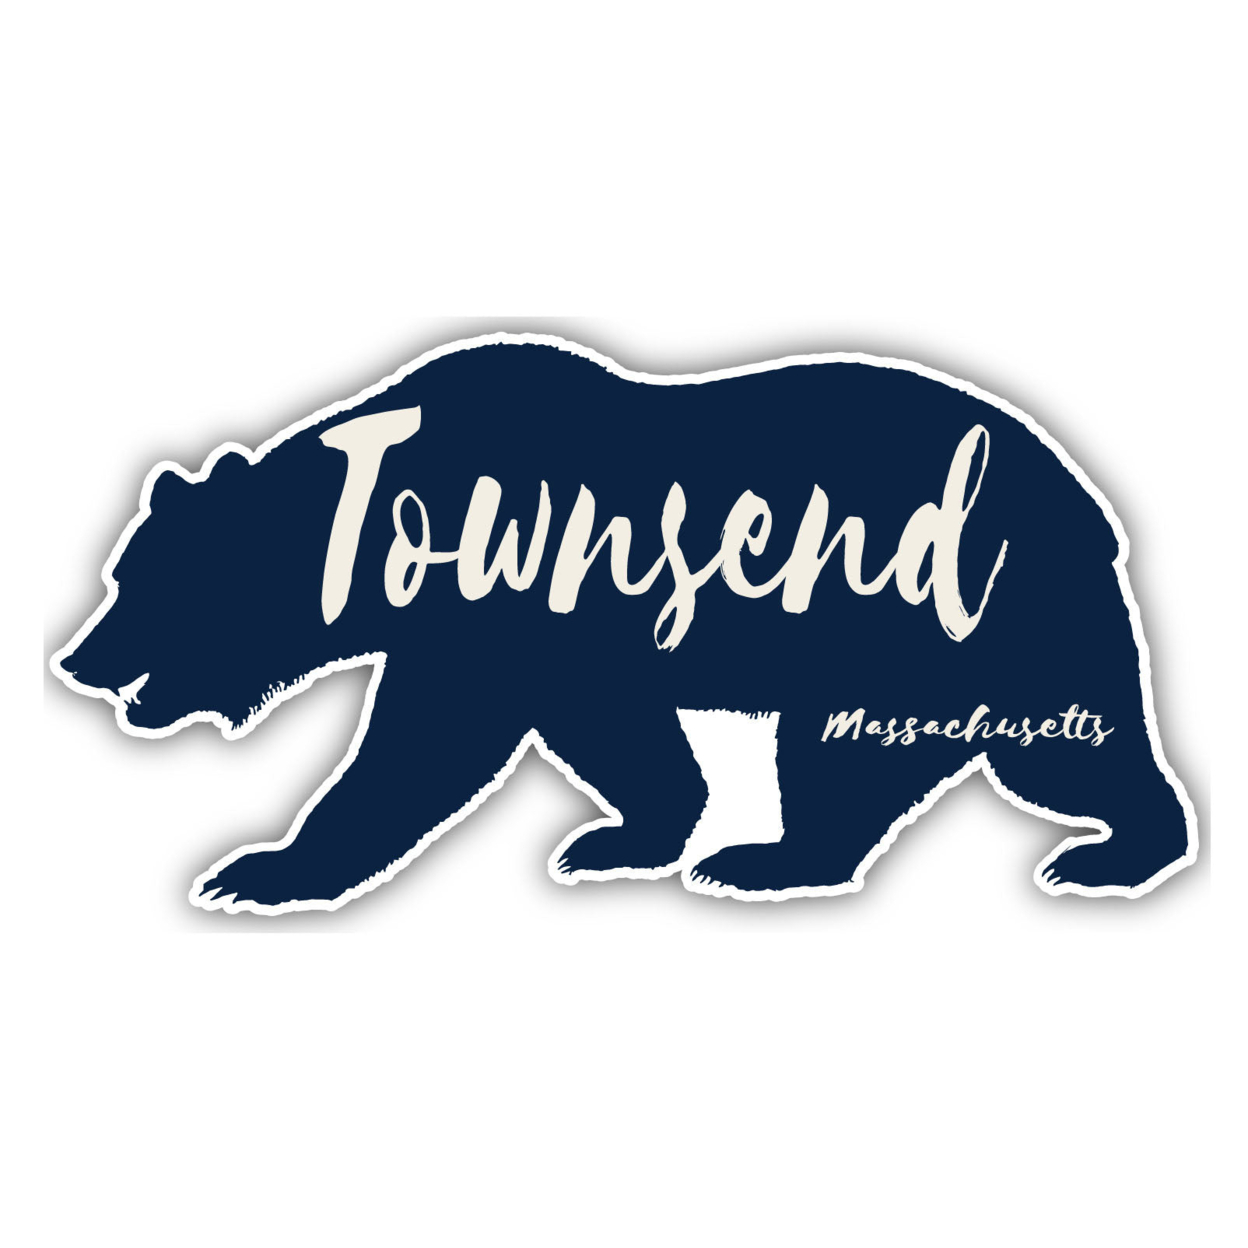 Townsend Massachusetts Souvenir Decorative Stickers (Choose Theme And Size) - Single Unit, 2-Inch, Bear